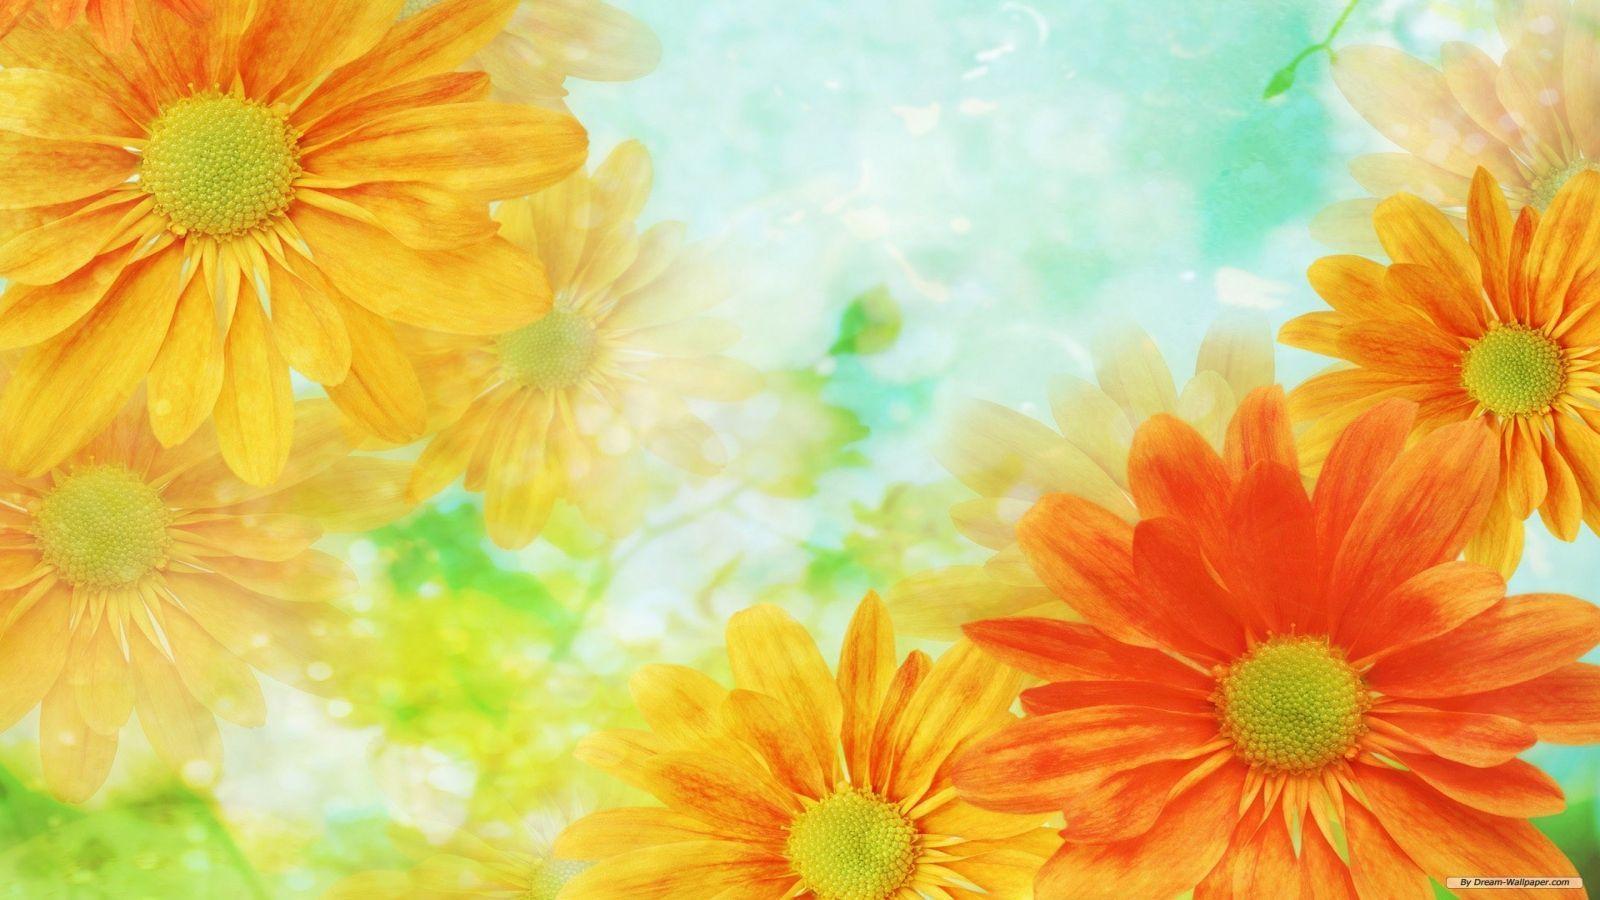 Free Download 1600x900 Resolution of high quality flower desktop